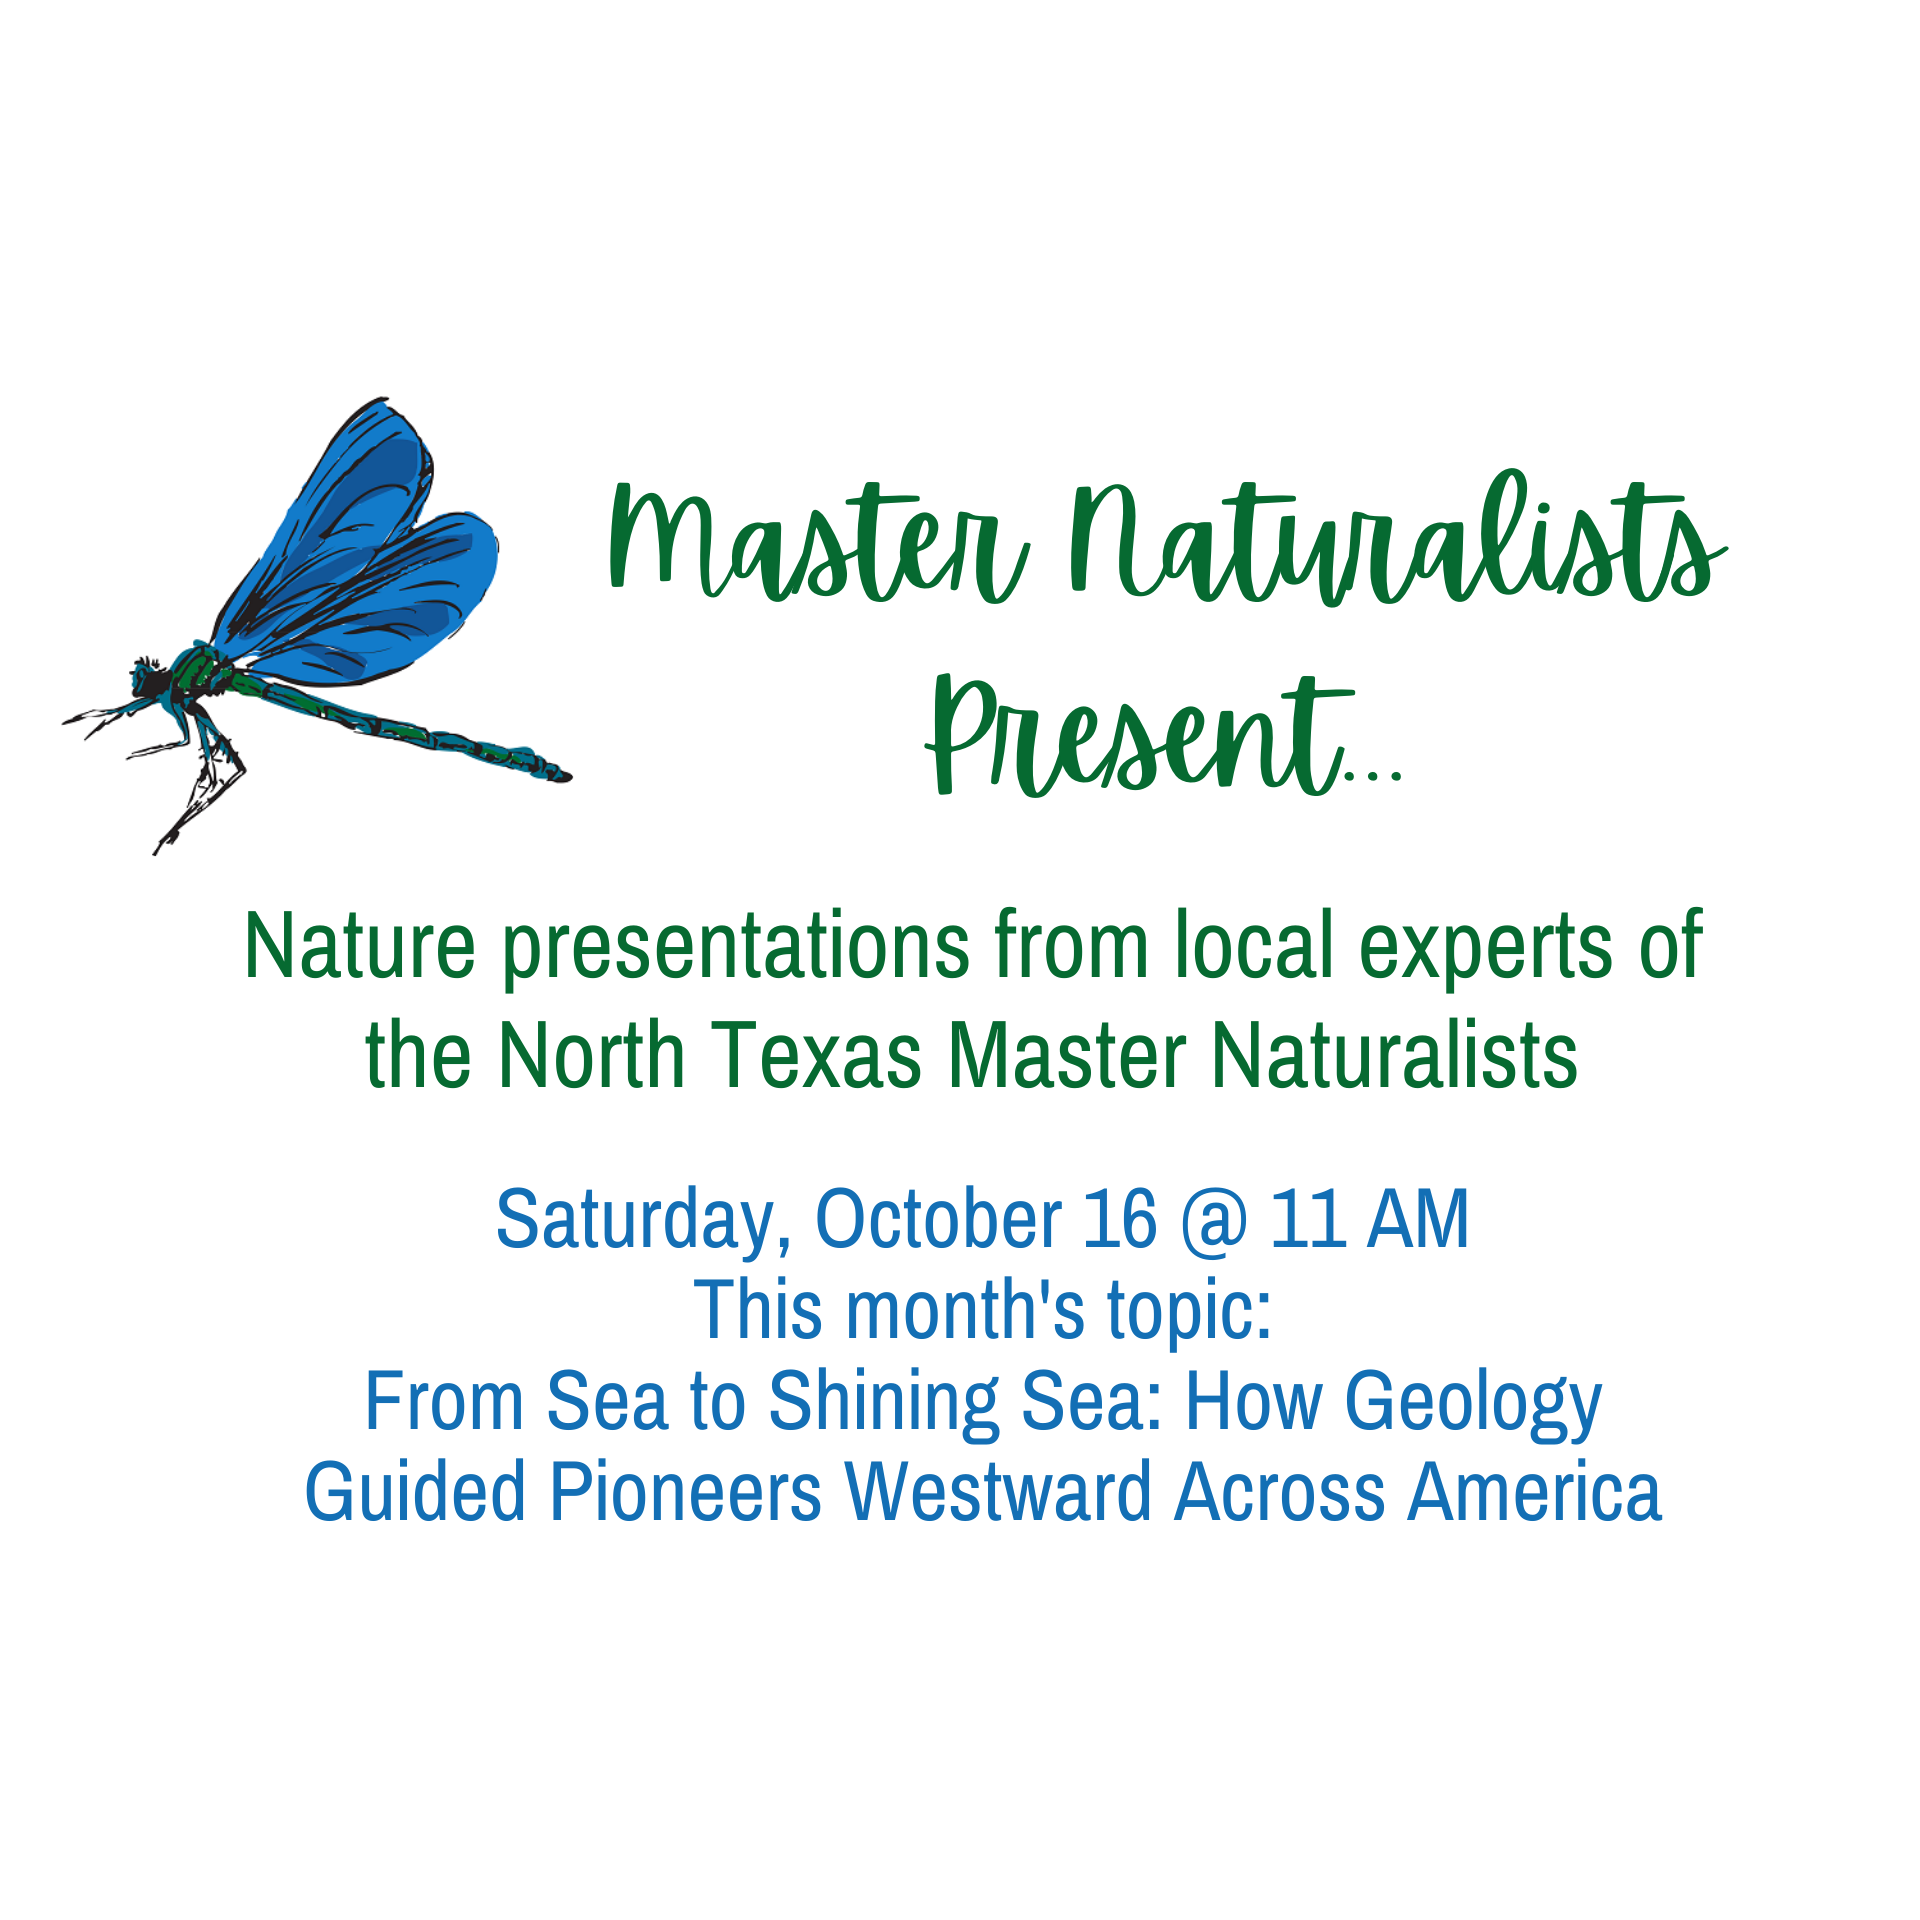 Master Naturalists Present series graphic